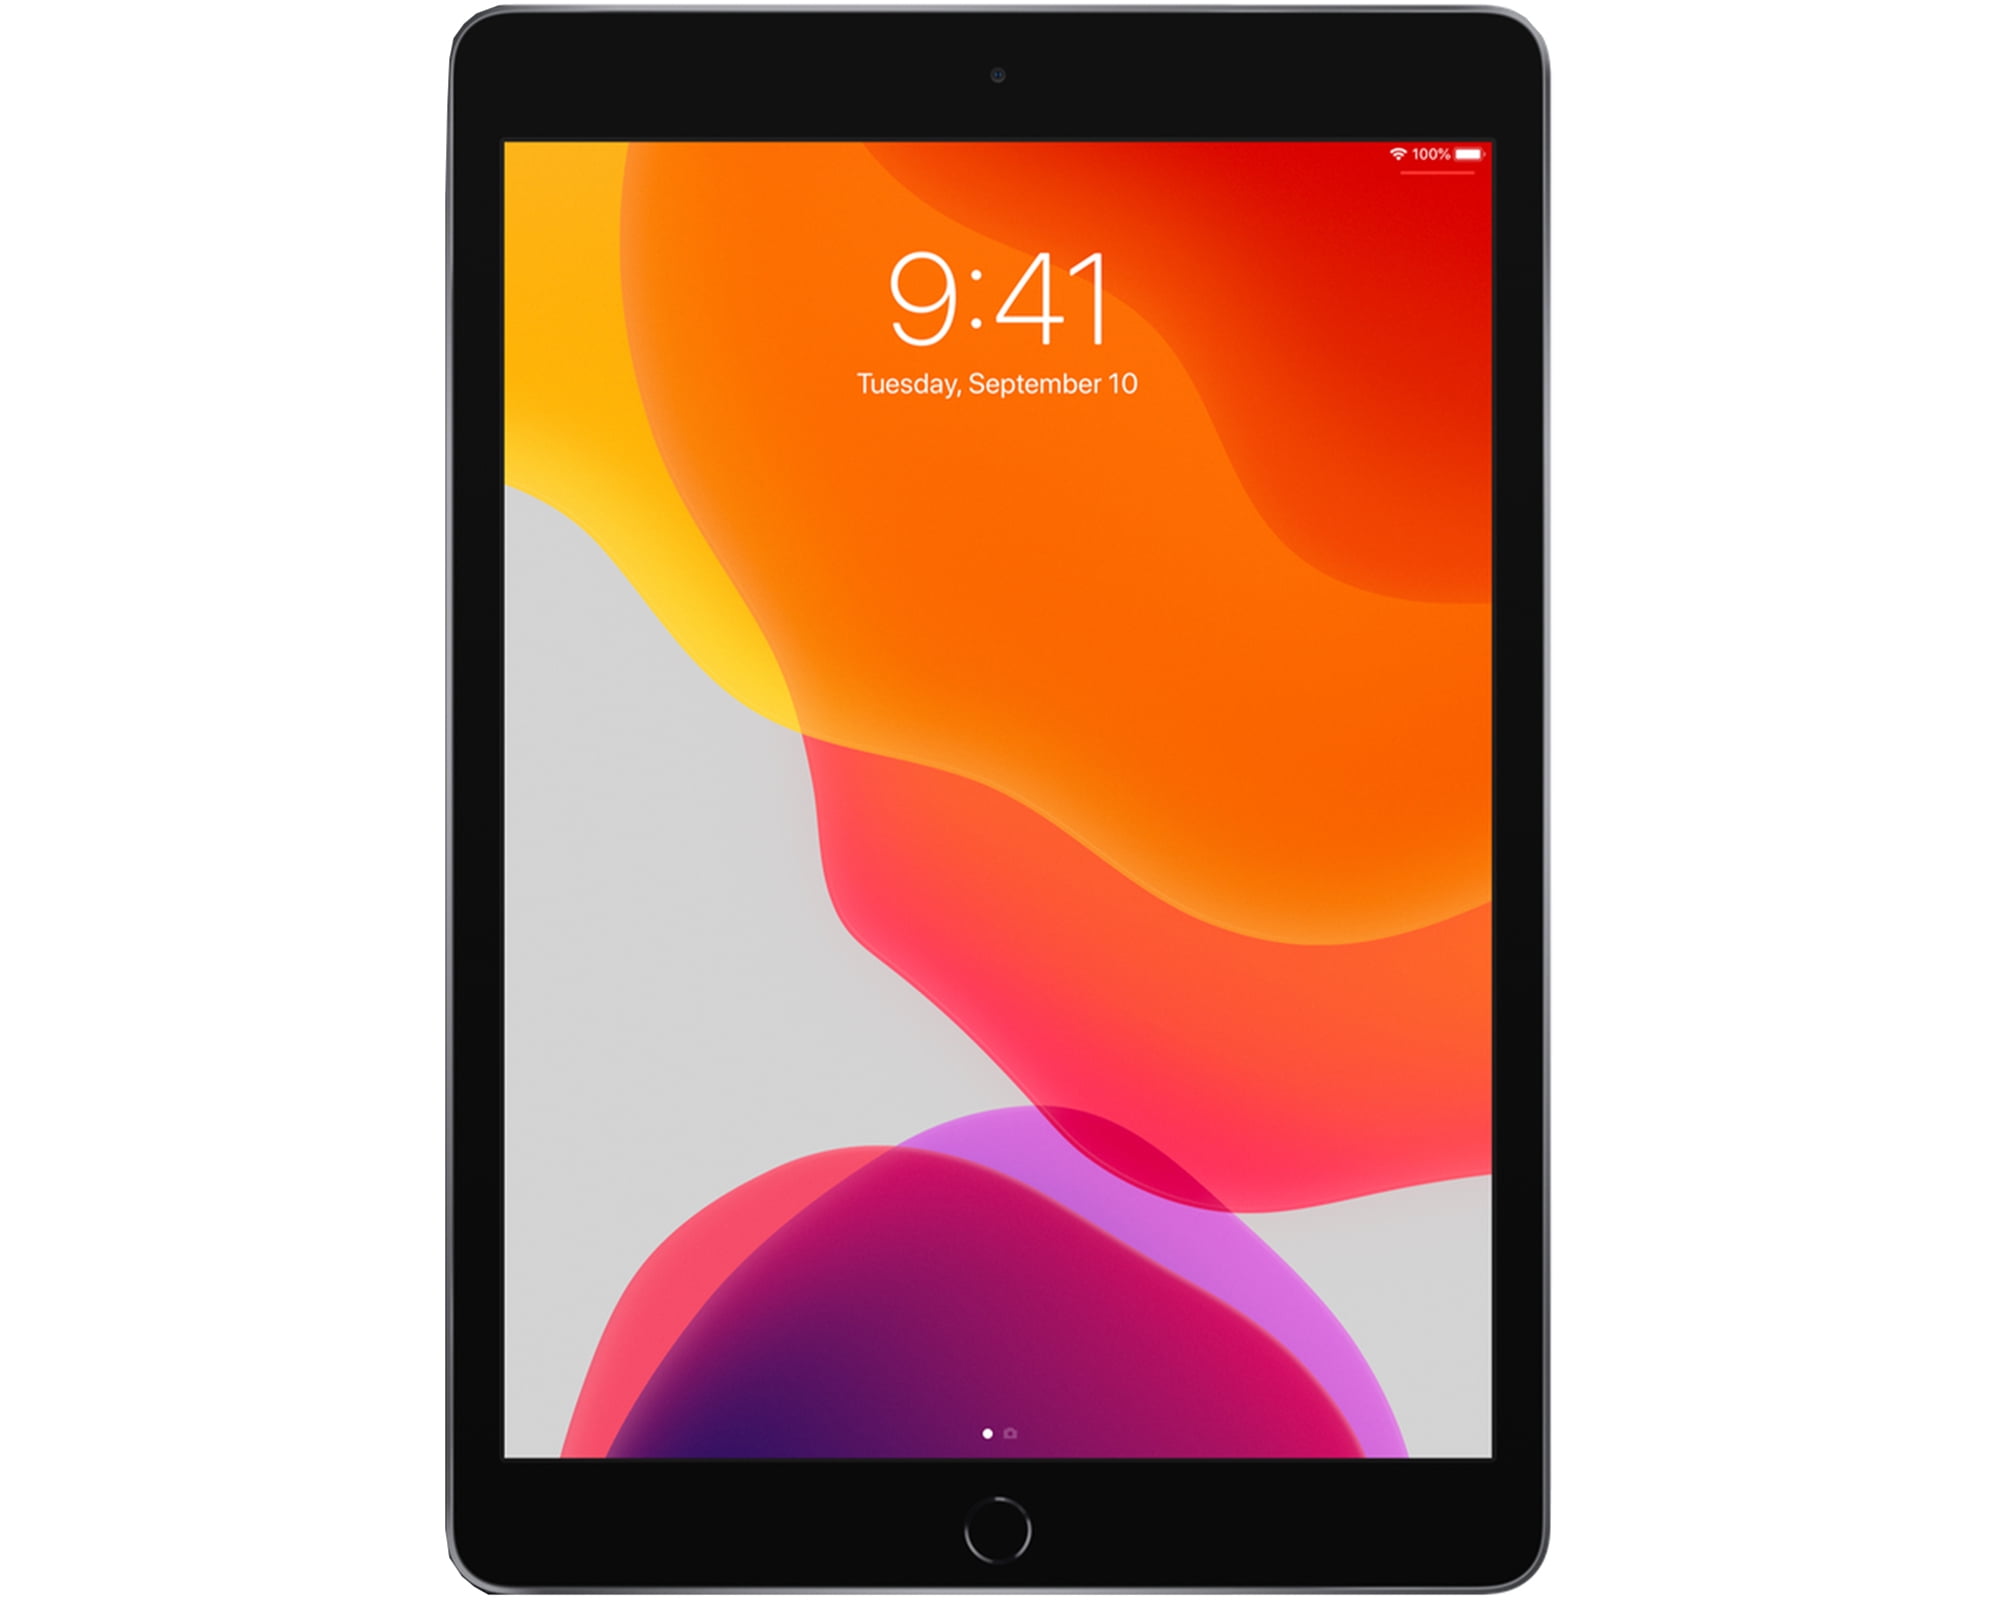 Restored Apple iPad Air 9.7-Inch 16GB Wi-Fi Tablet - Space Gray - MD785LL/A  (Refurbished)